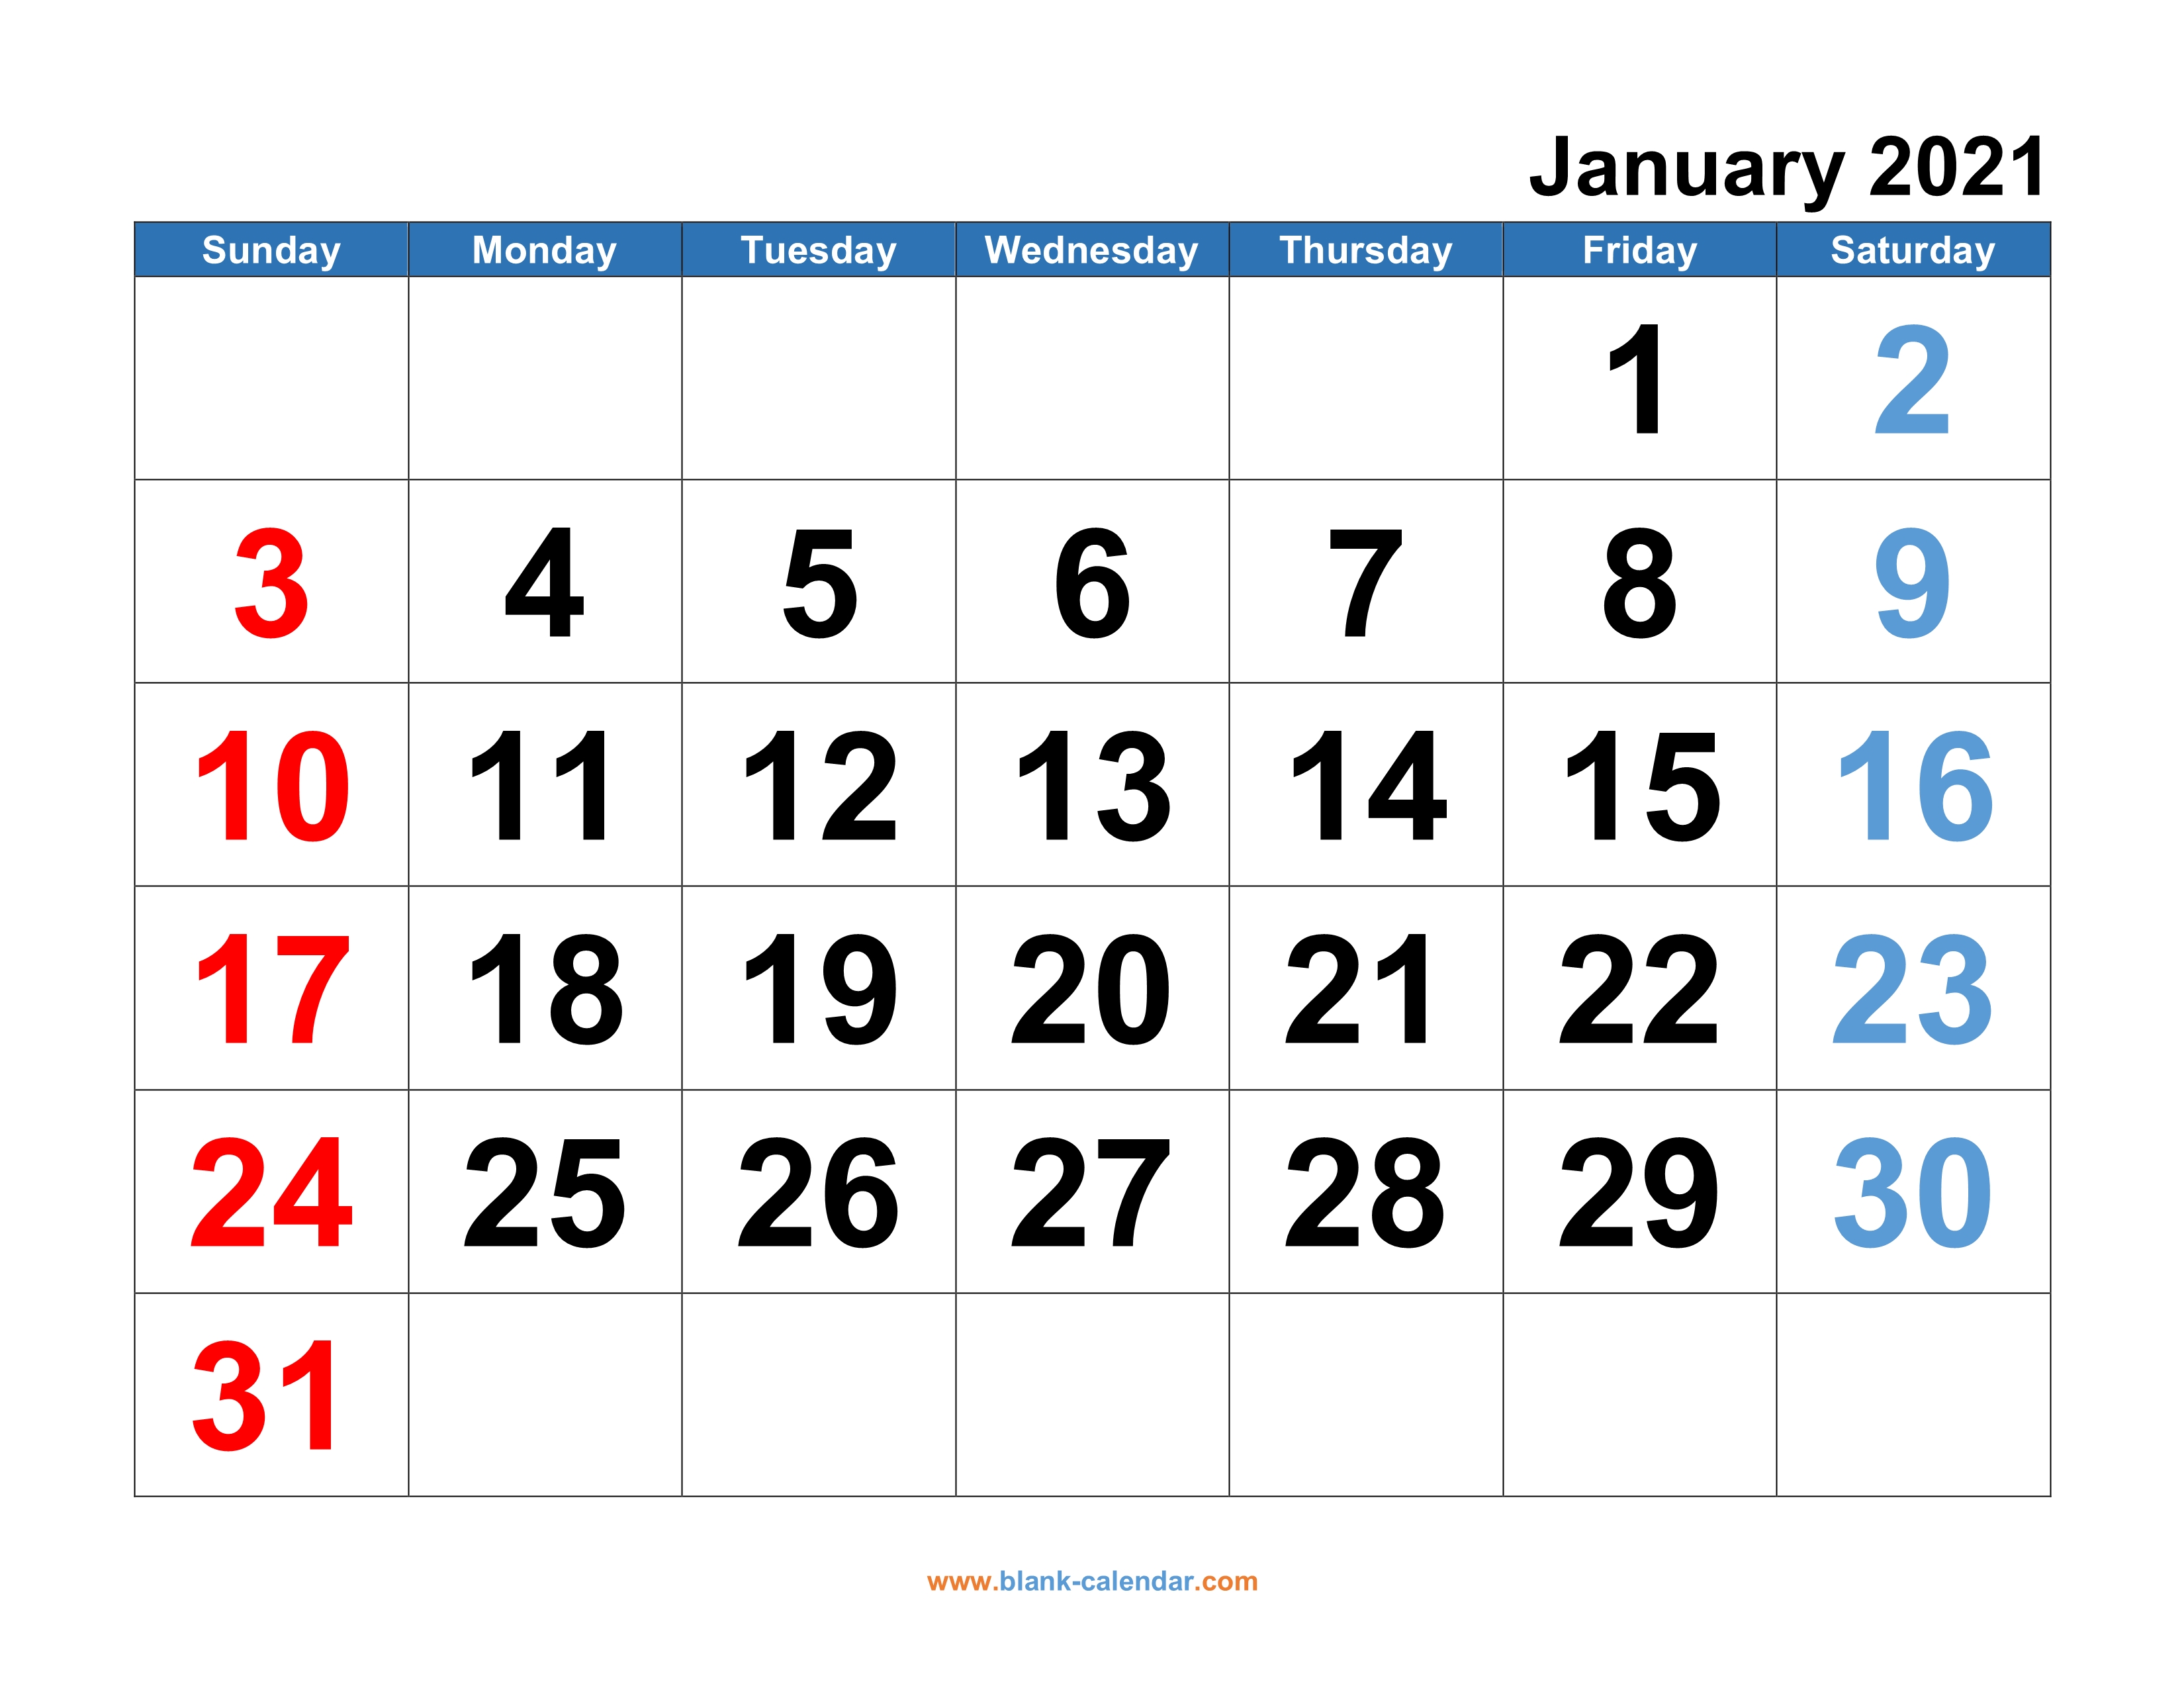 20-january-2021-calendar-big-numbers-free-download-printable-calendar-templates